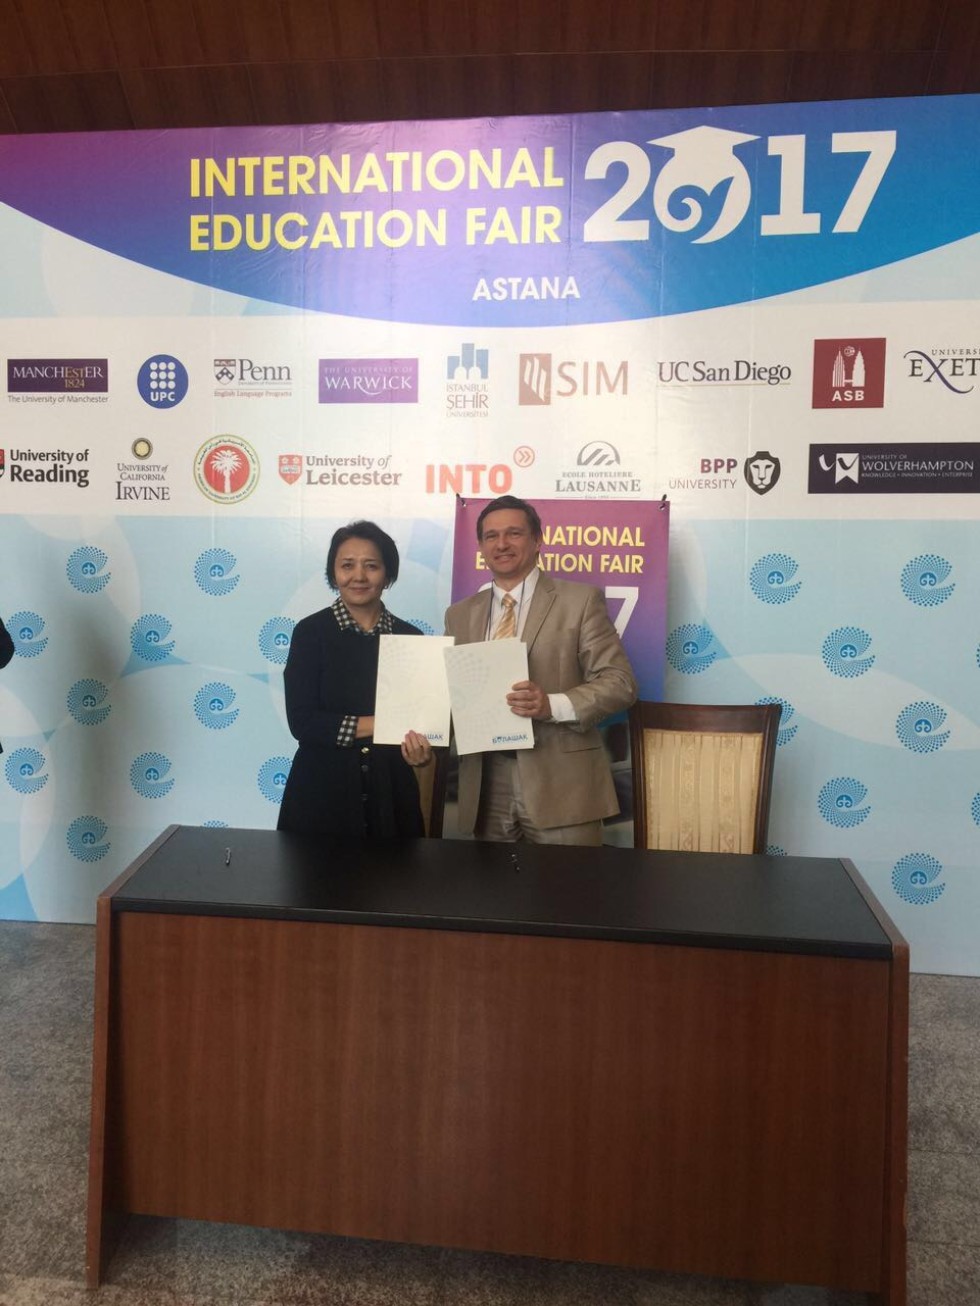 INTERNATIONAL EDUCATION FAIR 2017